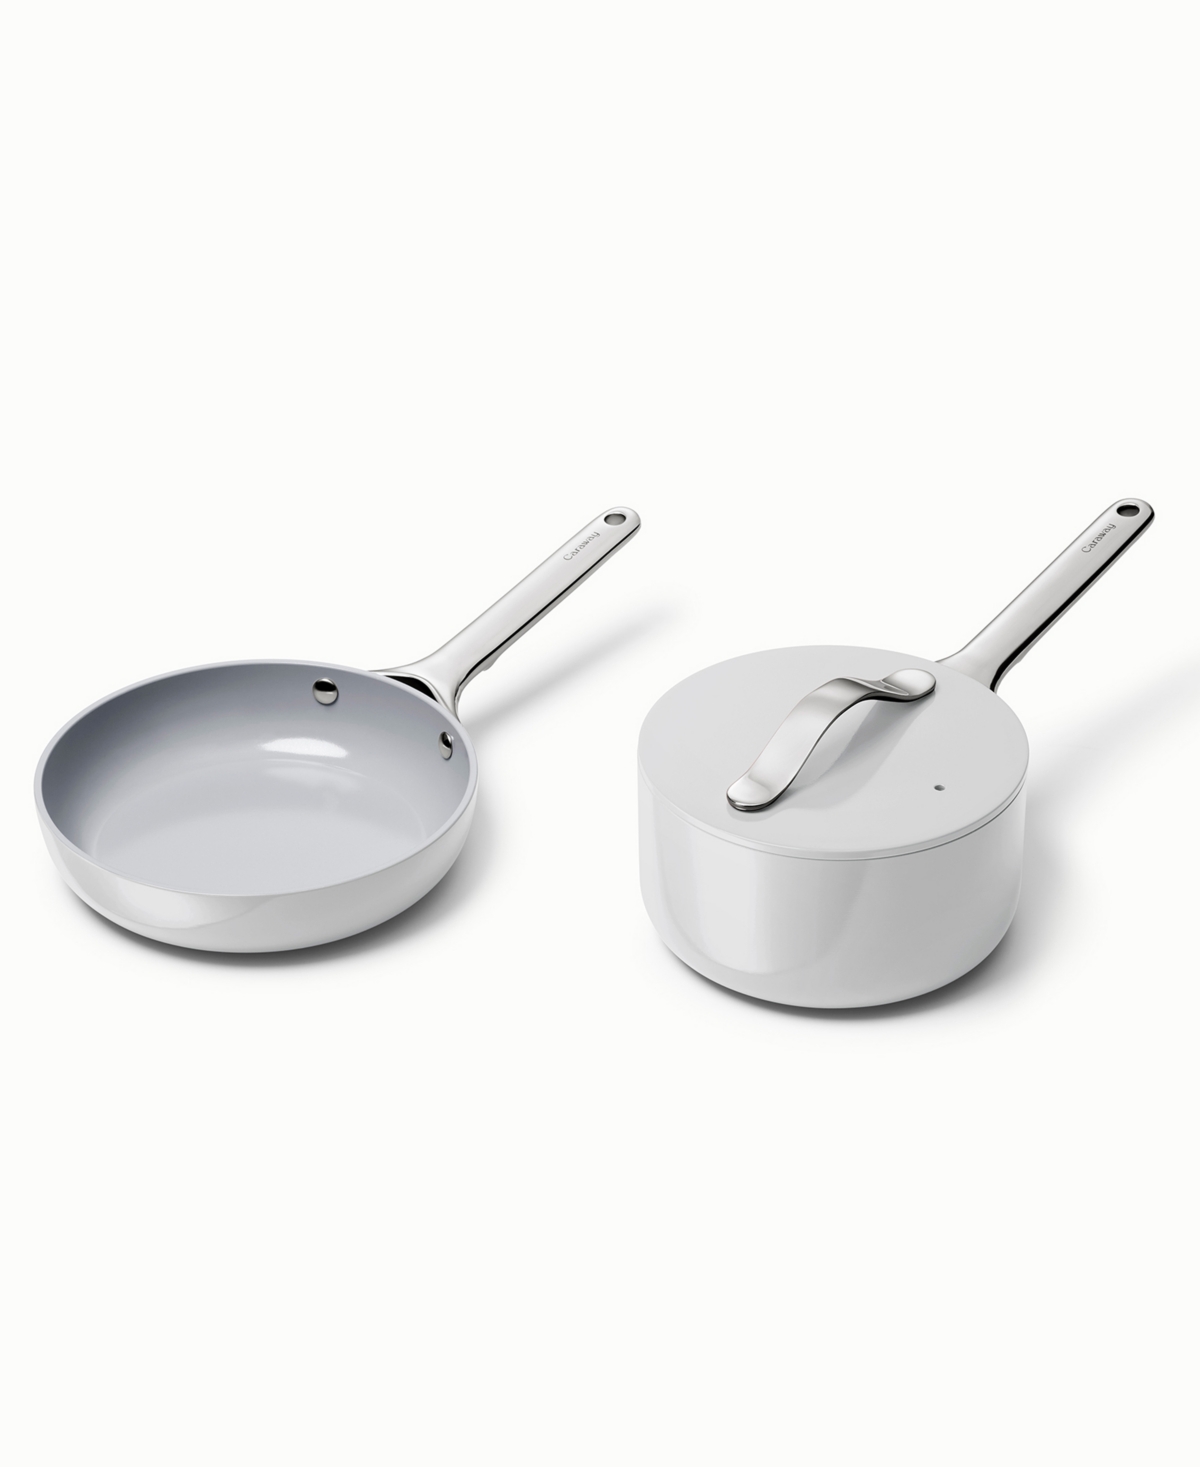 Caraway Non-stick Ceramic Mini Fry Pan And Sauce Pan Duo In Gray